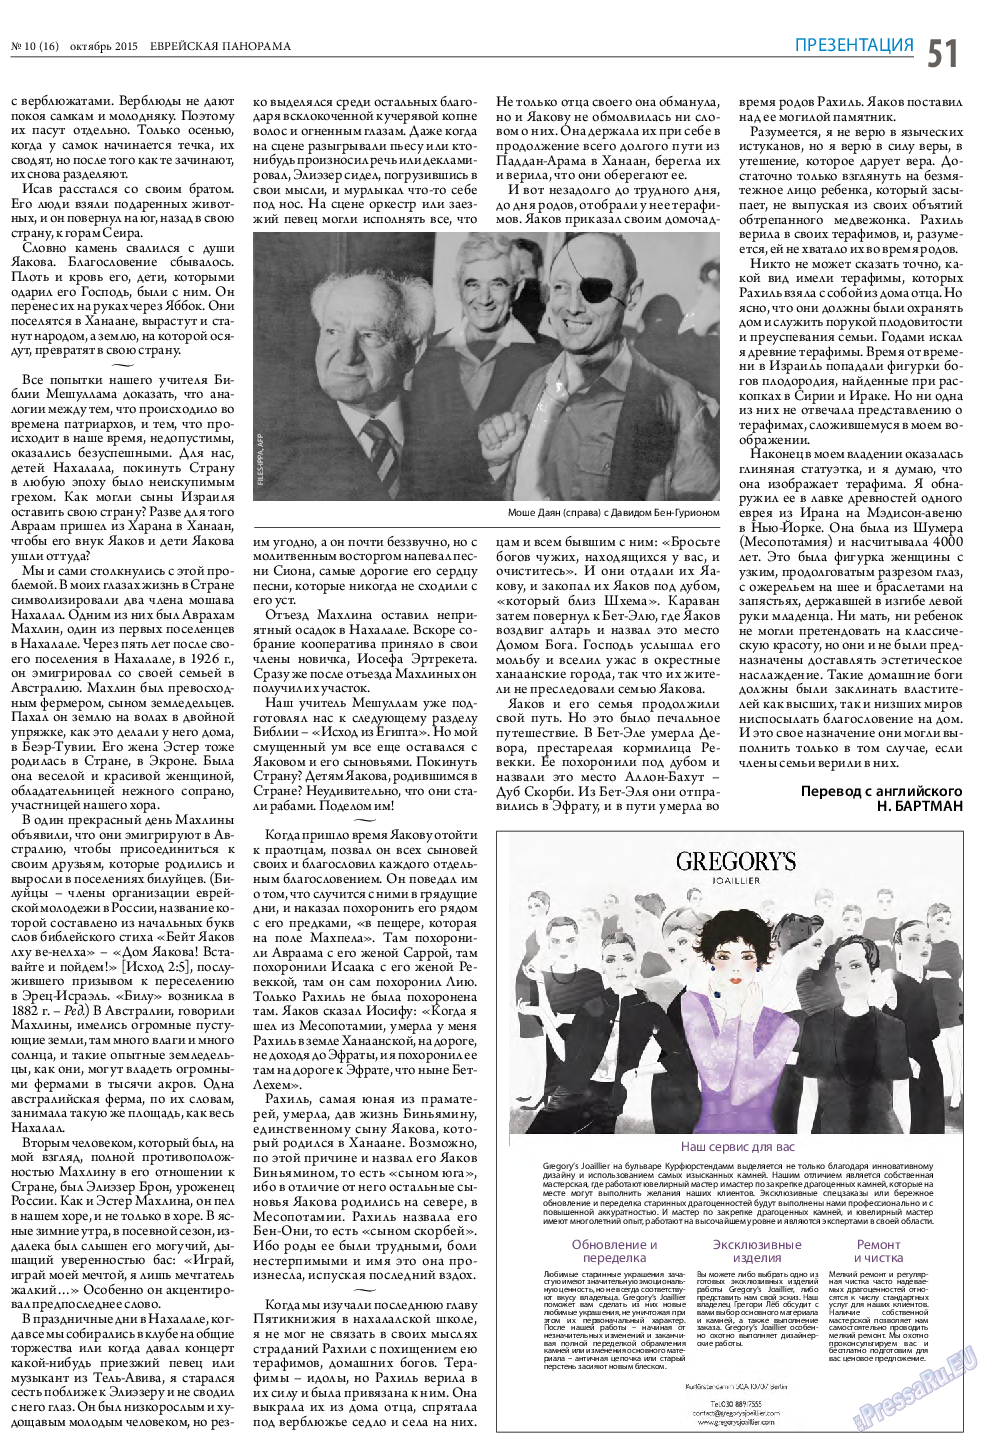 Еврейская панорама, газета. 2015 №10 стр.51